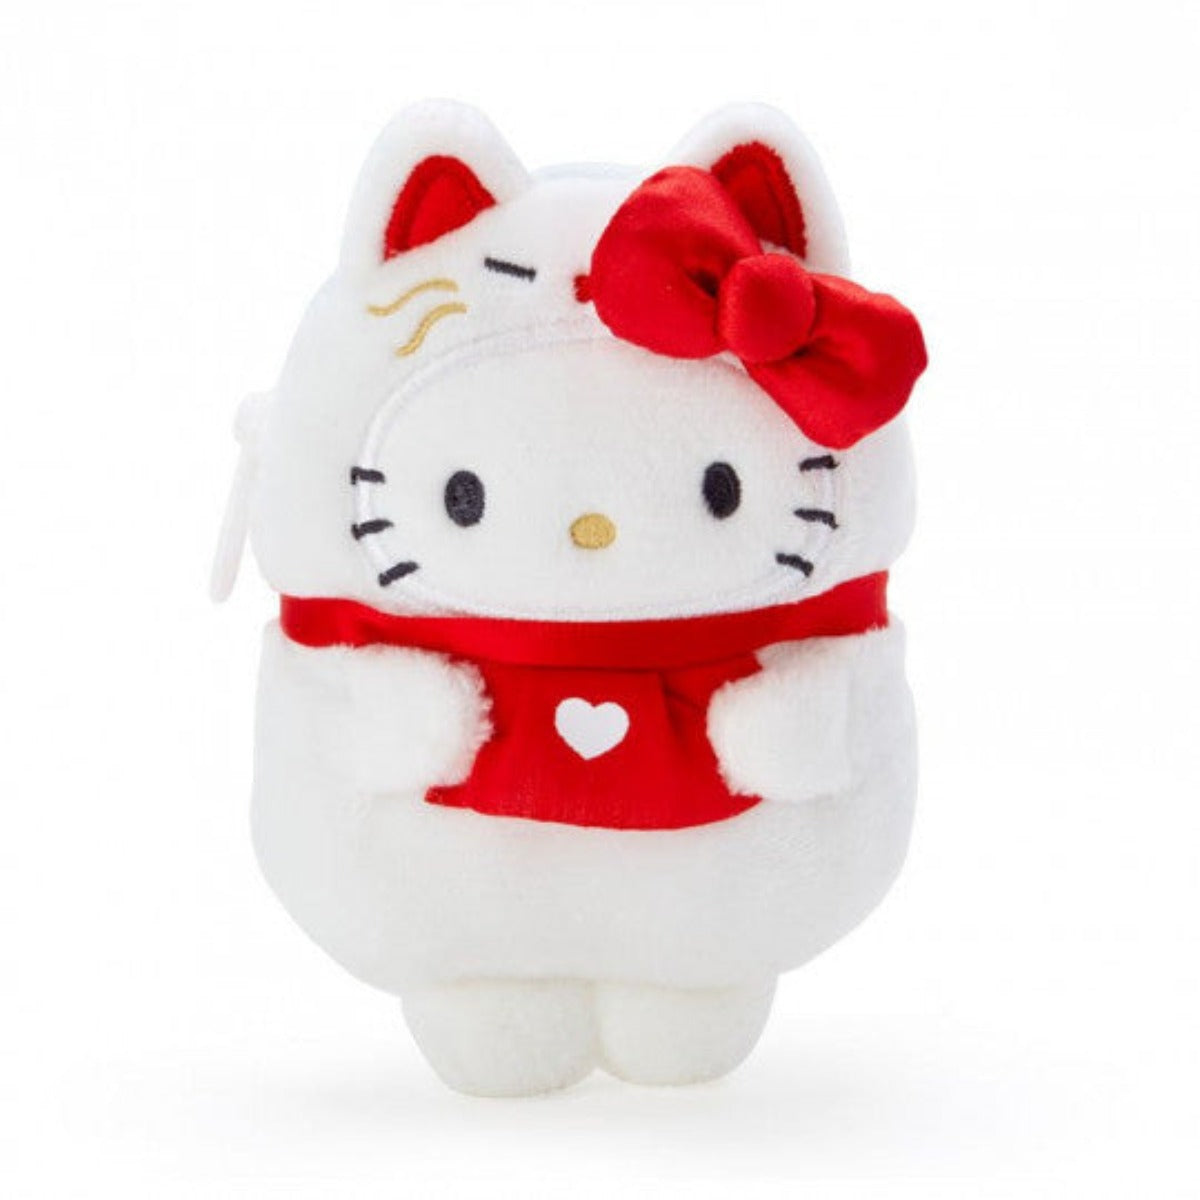 Plush Hello Kitty  Coin Bag